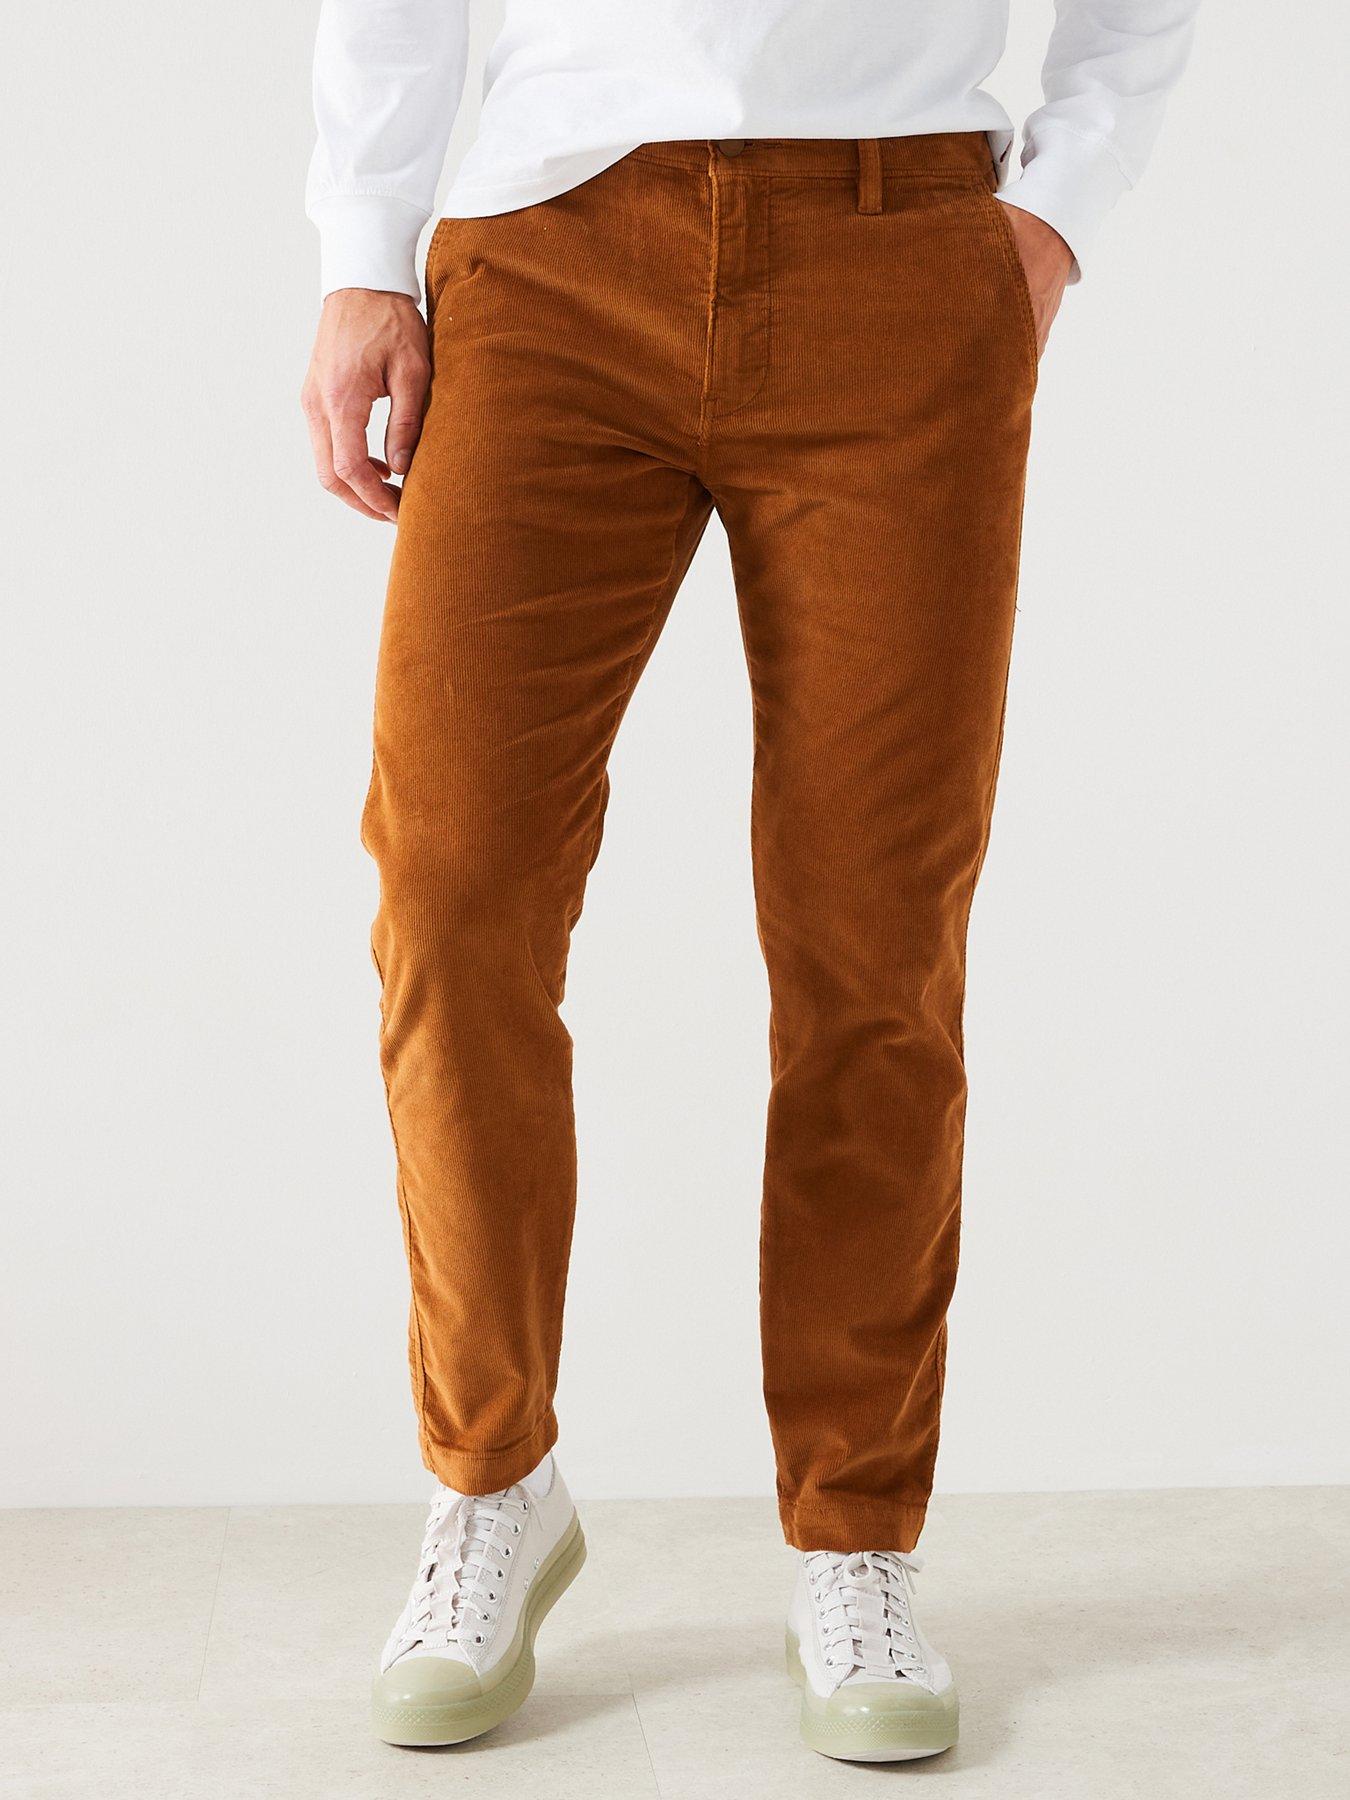 XX Chino Standard Trousers - Brown